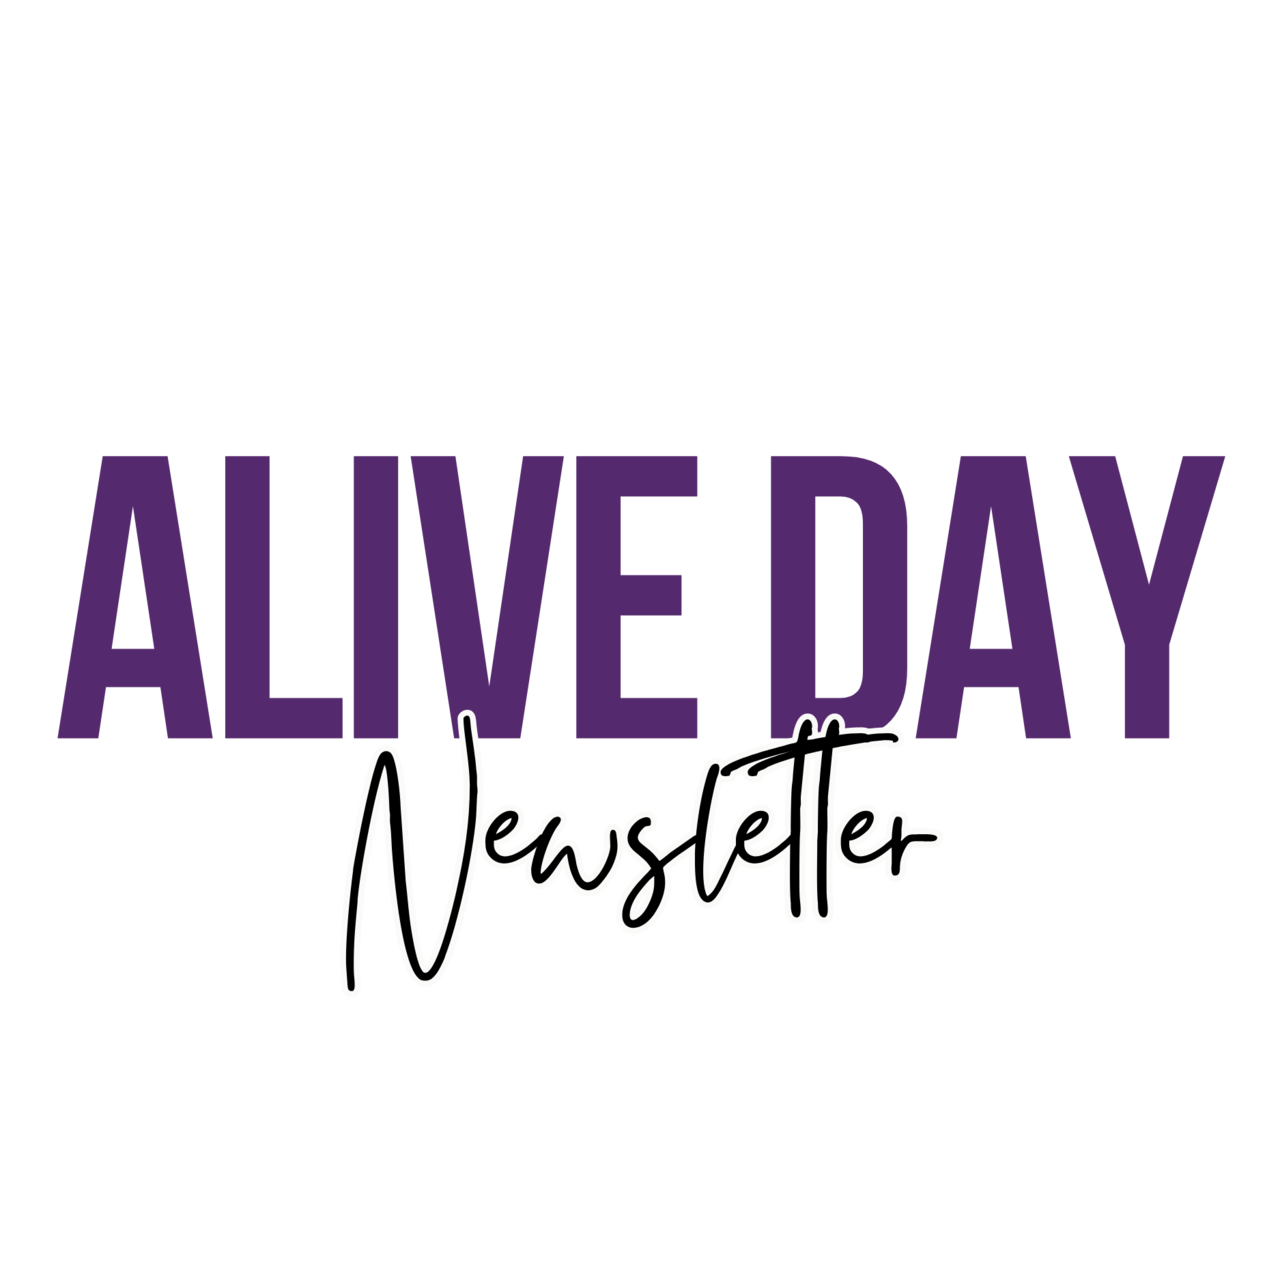 Alive Day Newsletter